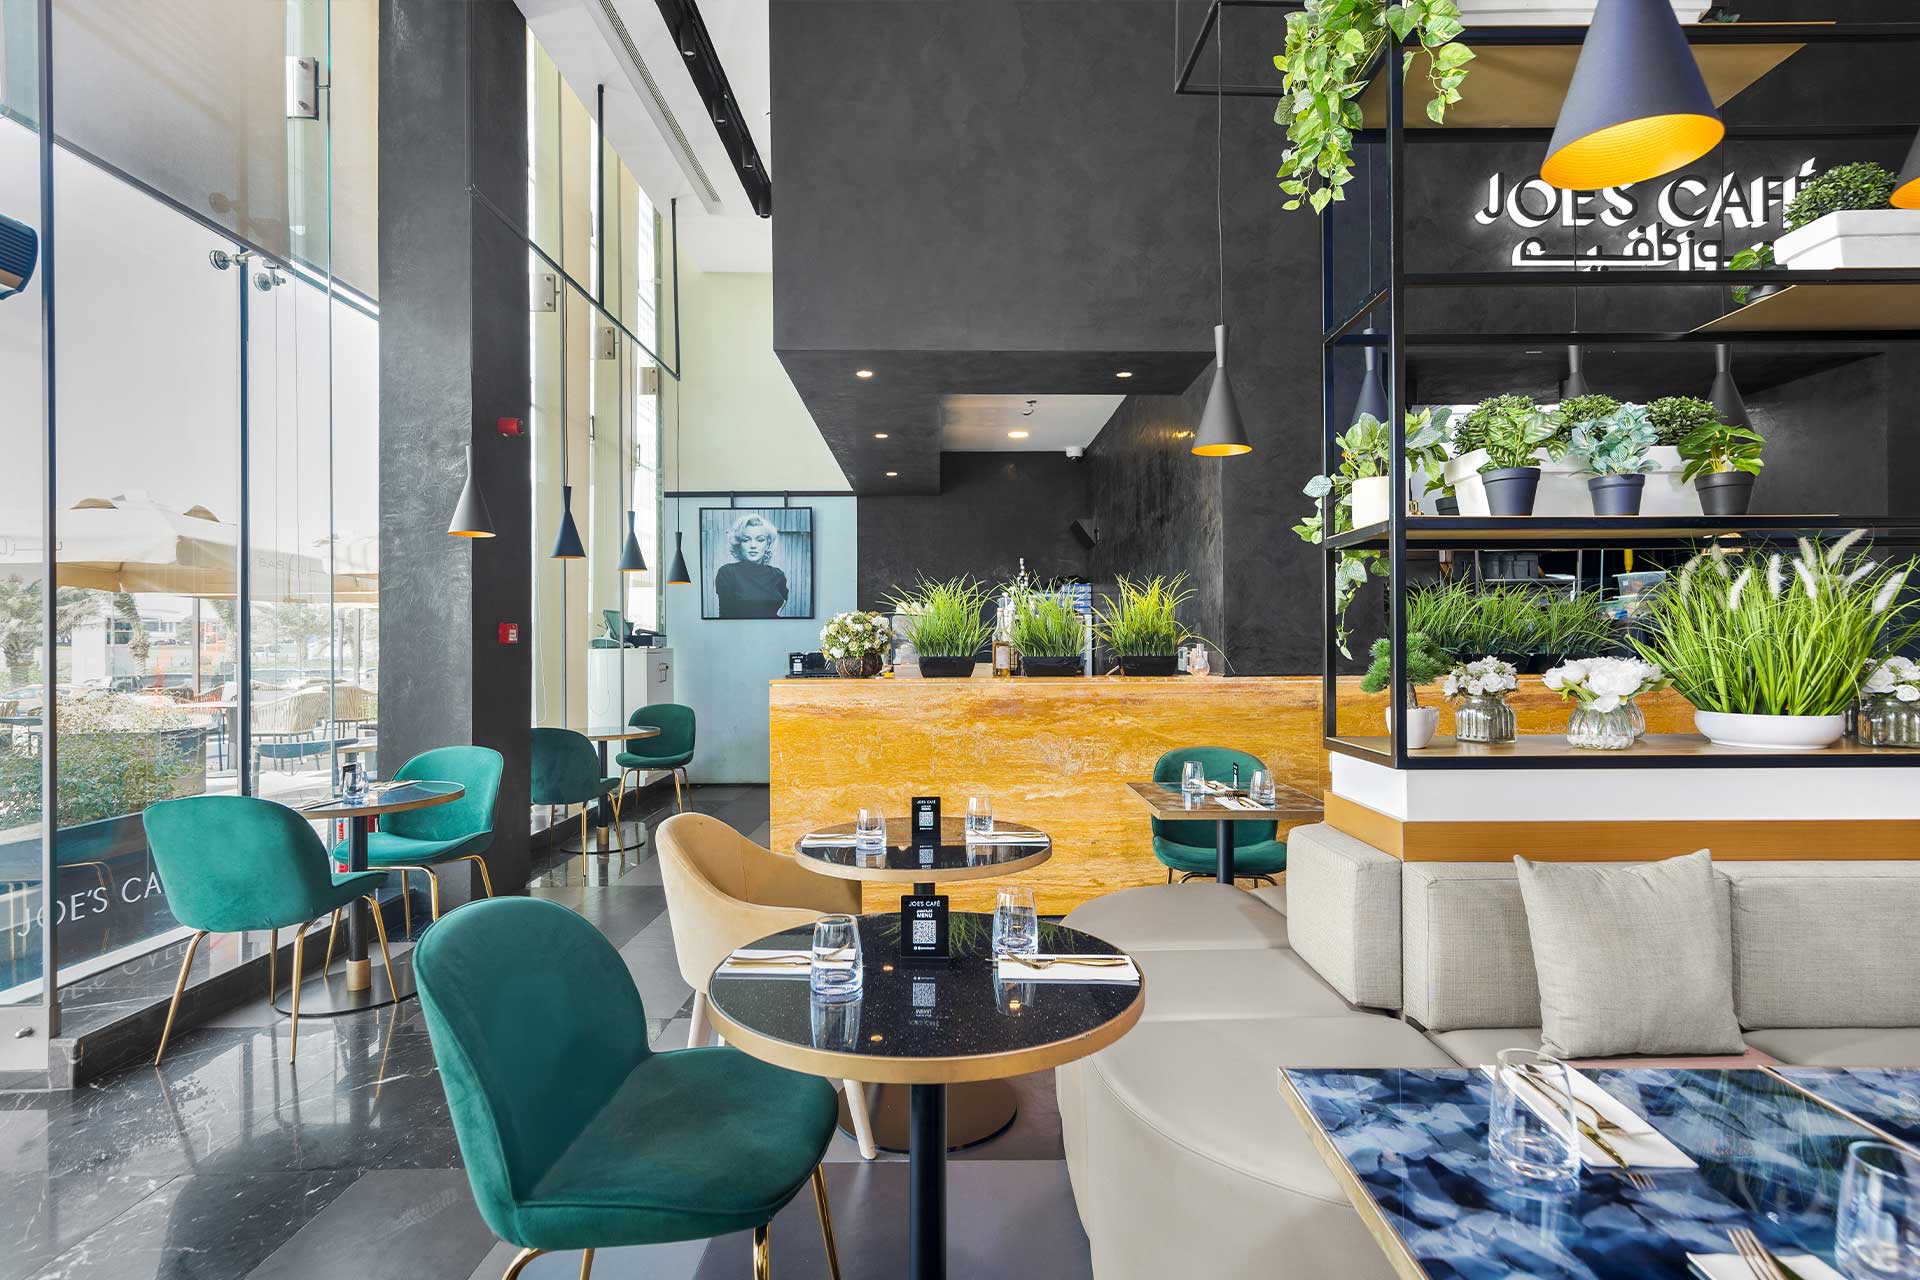 Interior of Joe's Café Qatar - Image 3